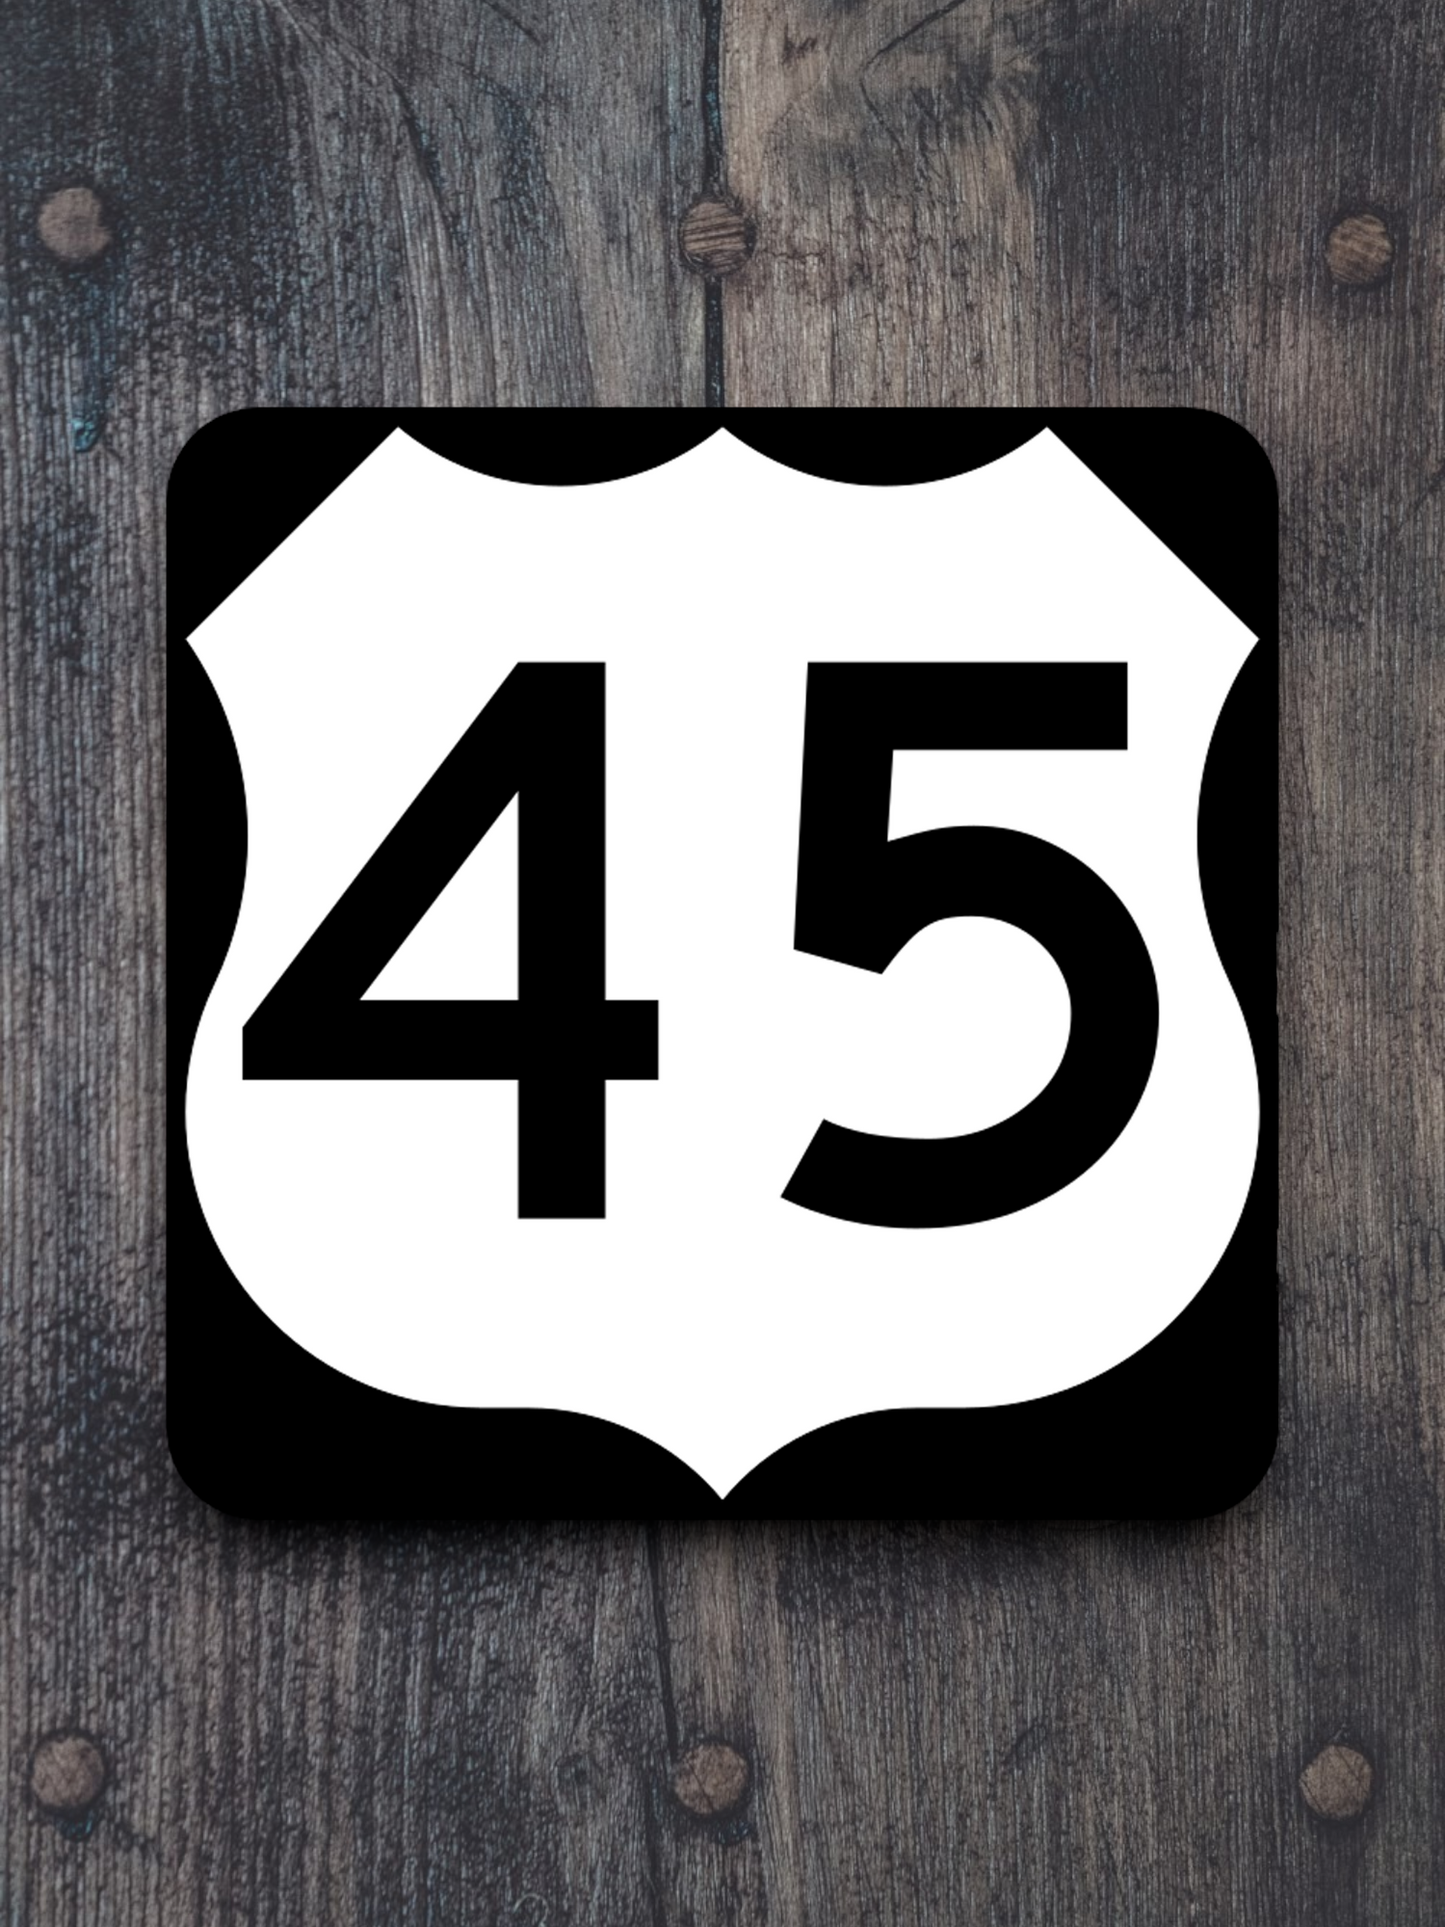 U.S. Route 45 Road Sign Sticker